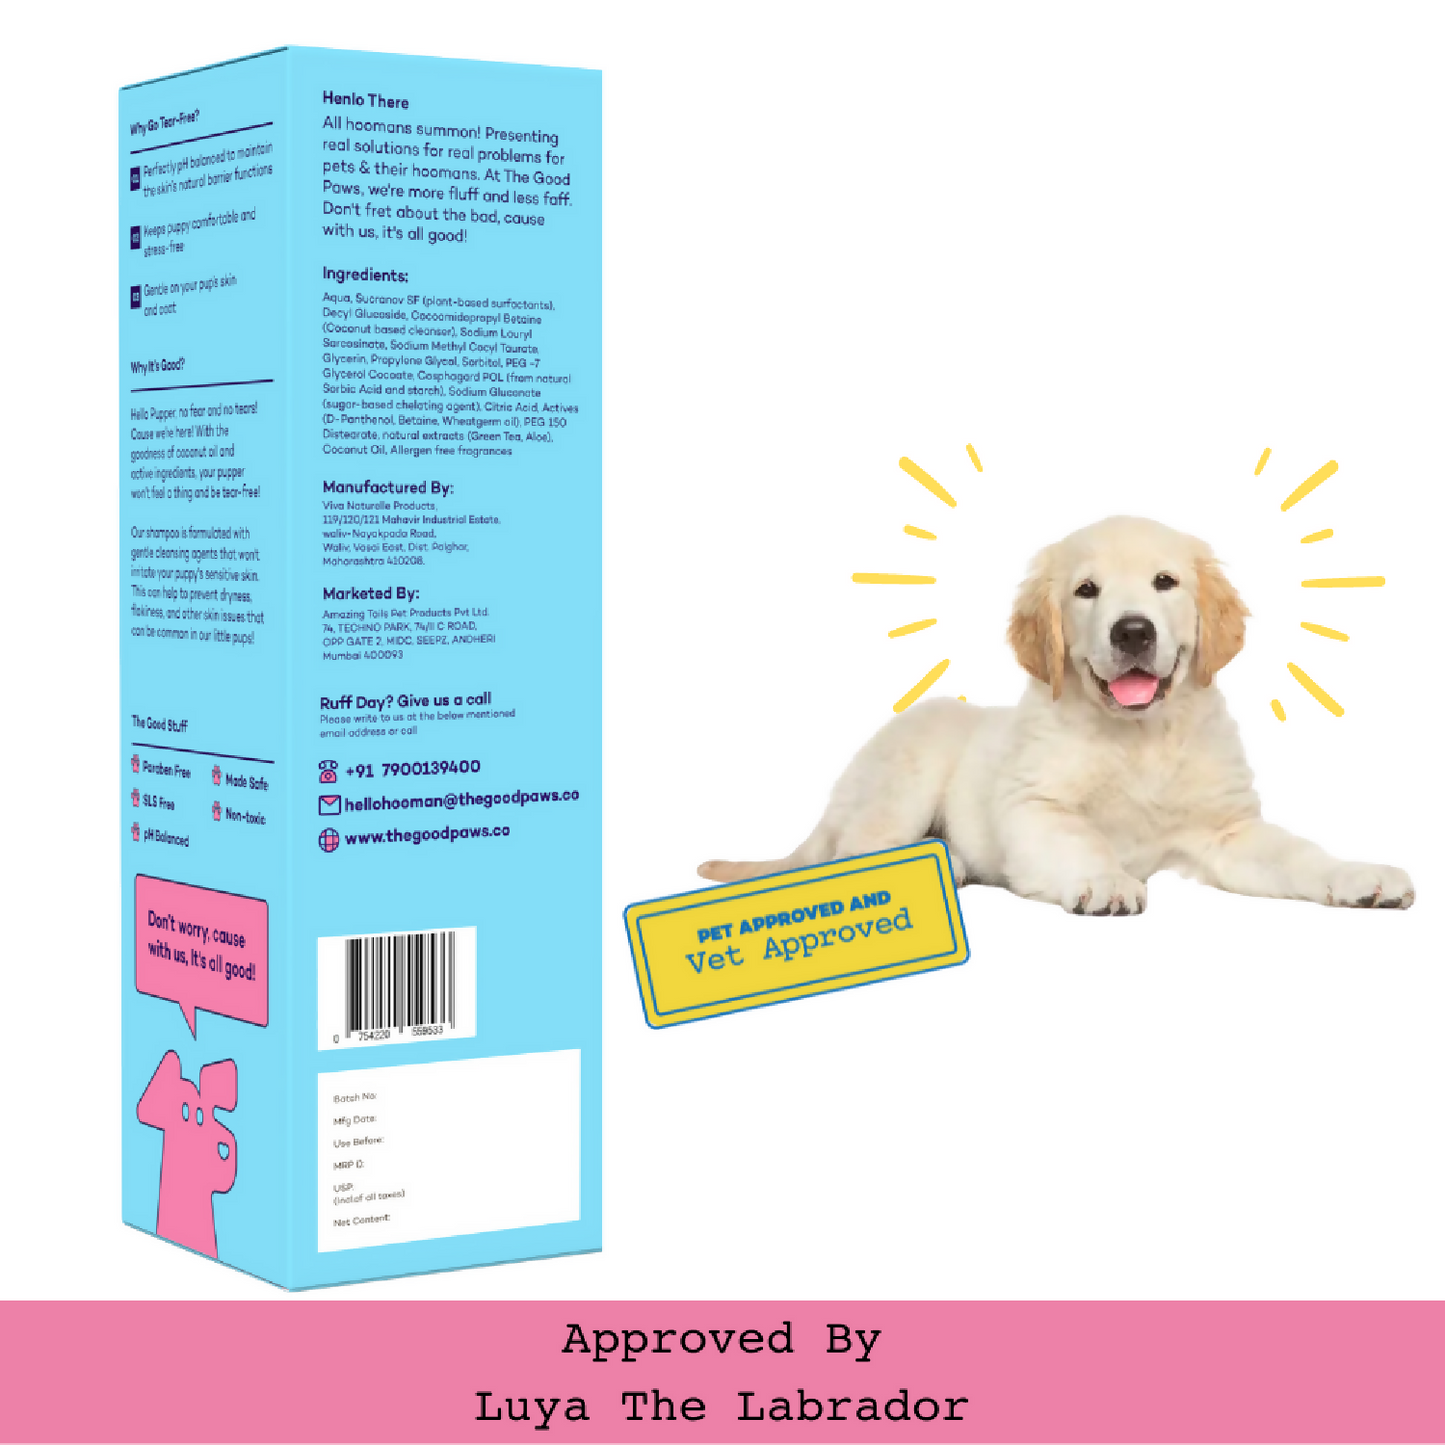 The Good Paws Fluffer Pupper Puppy Shampoo | No Tears Shampoo | All Natural Coconut Oil Shampoo